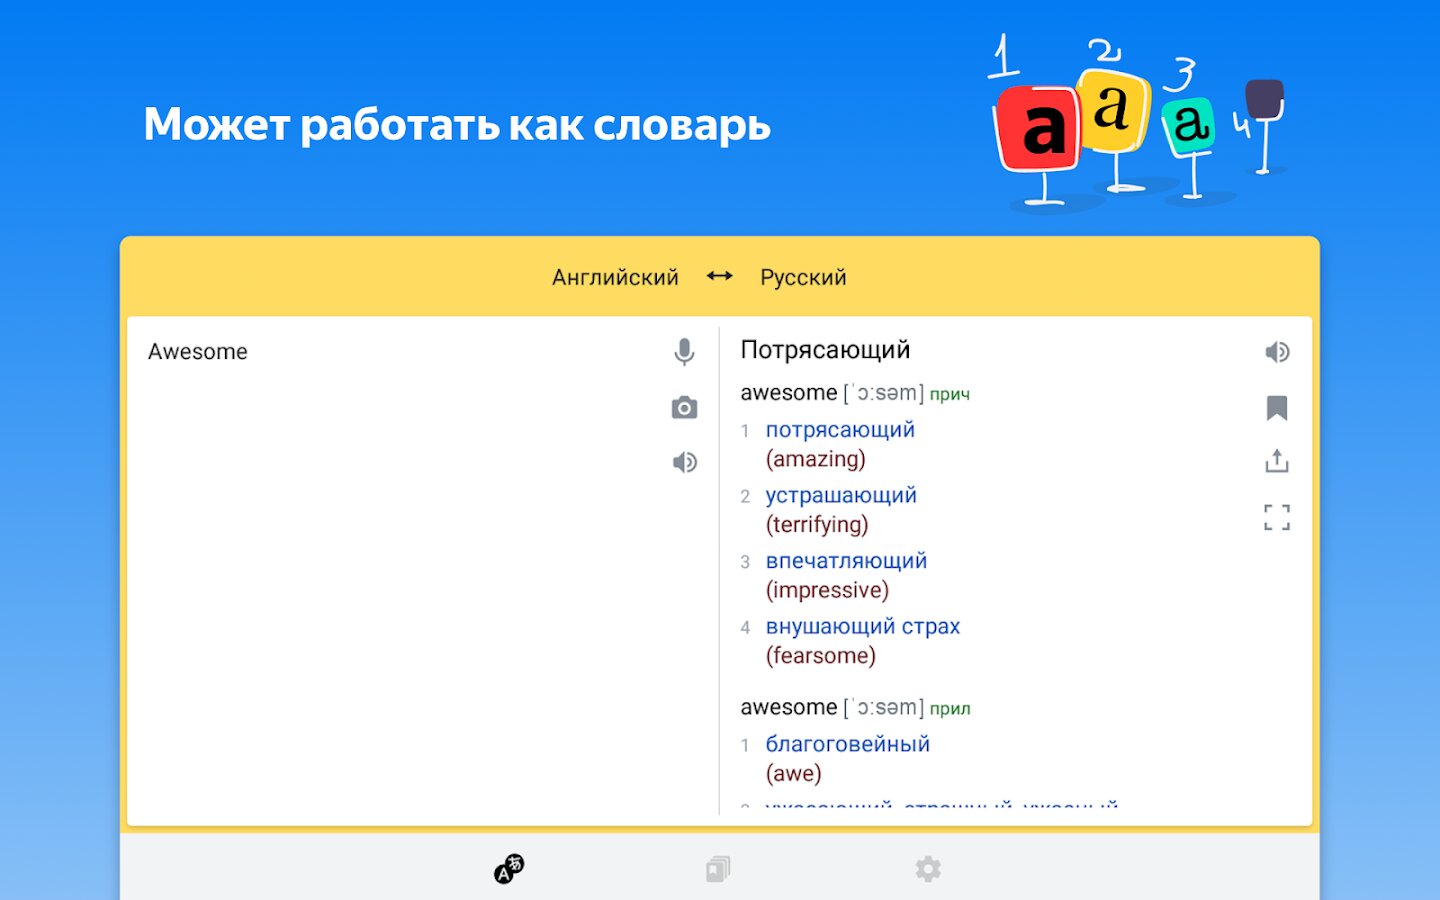 Яндекс переводчик